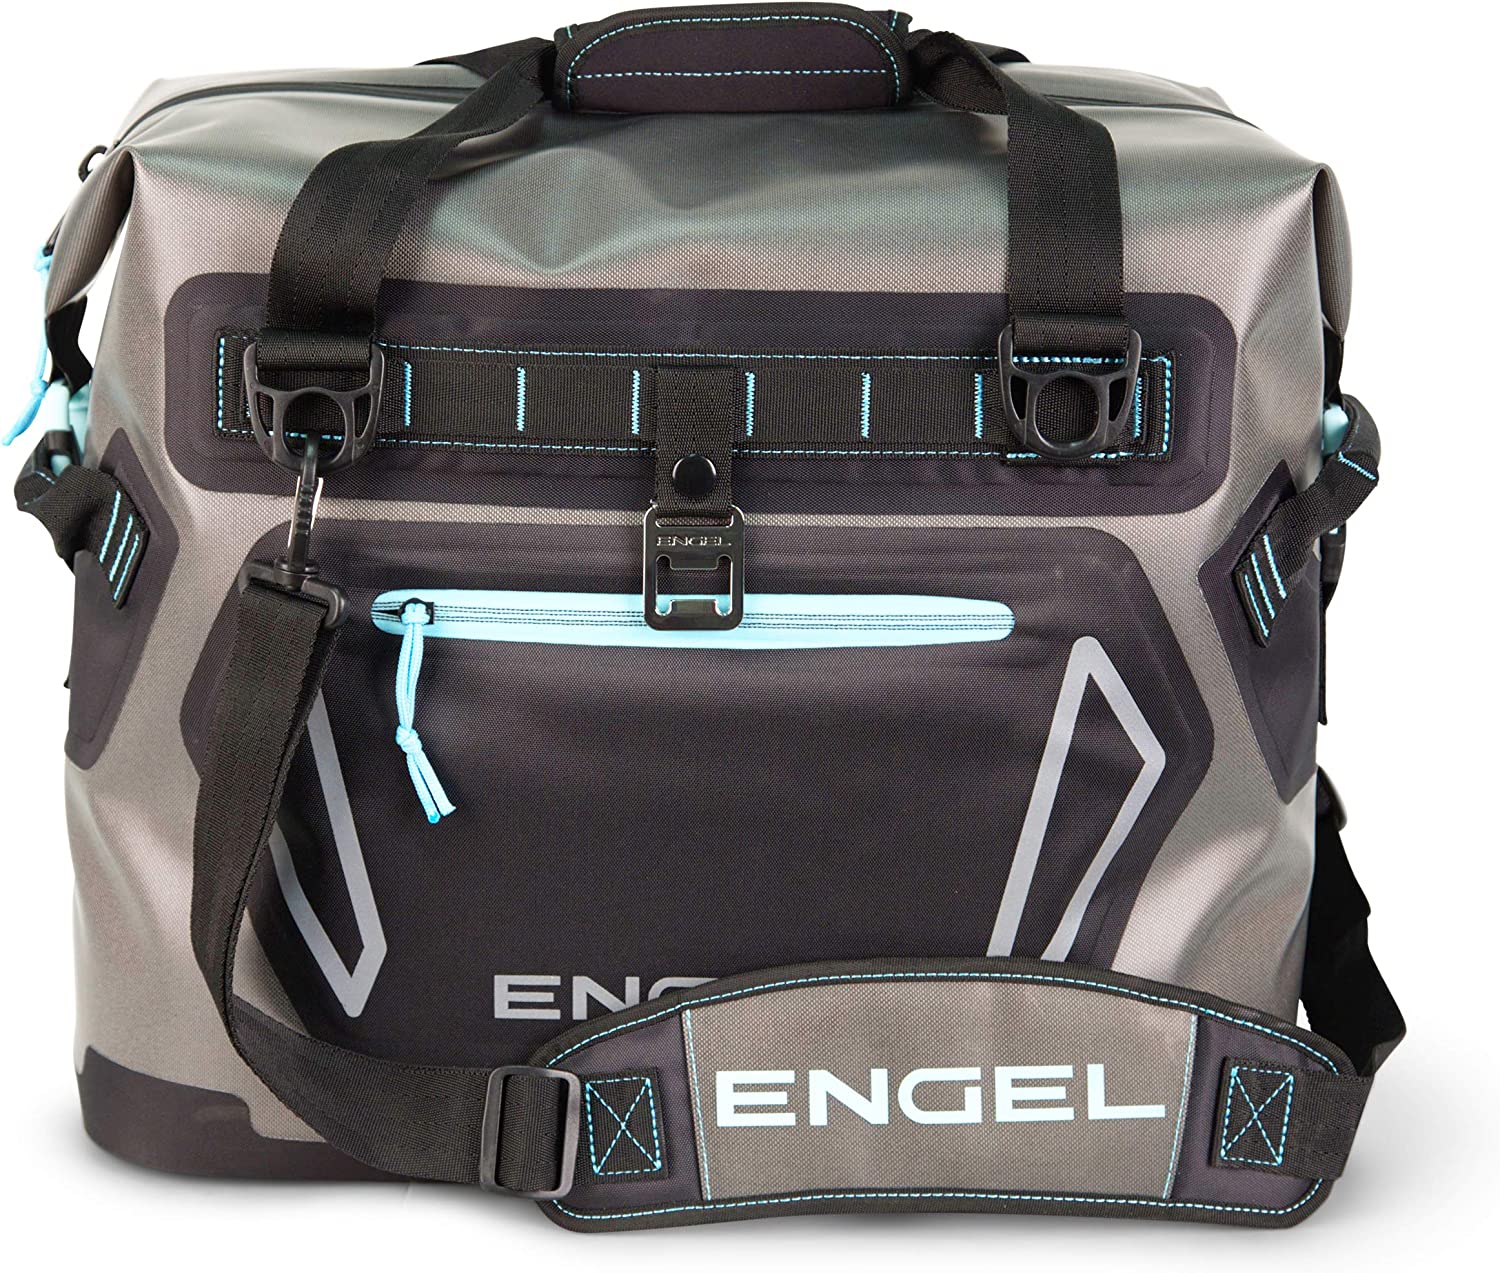 Engel HD20 soft cooler